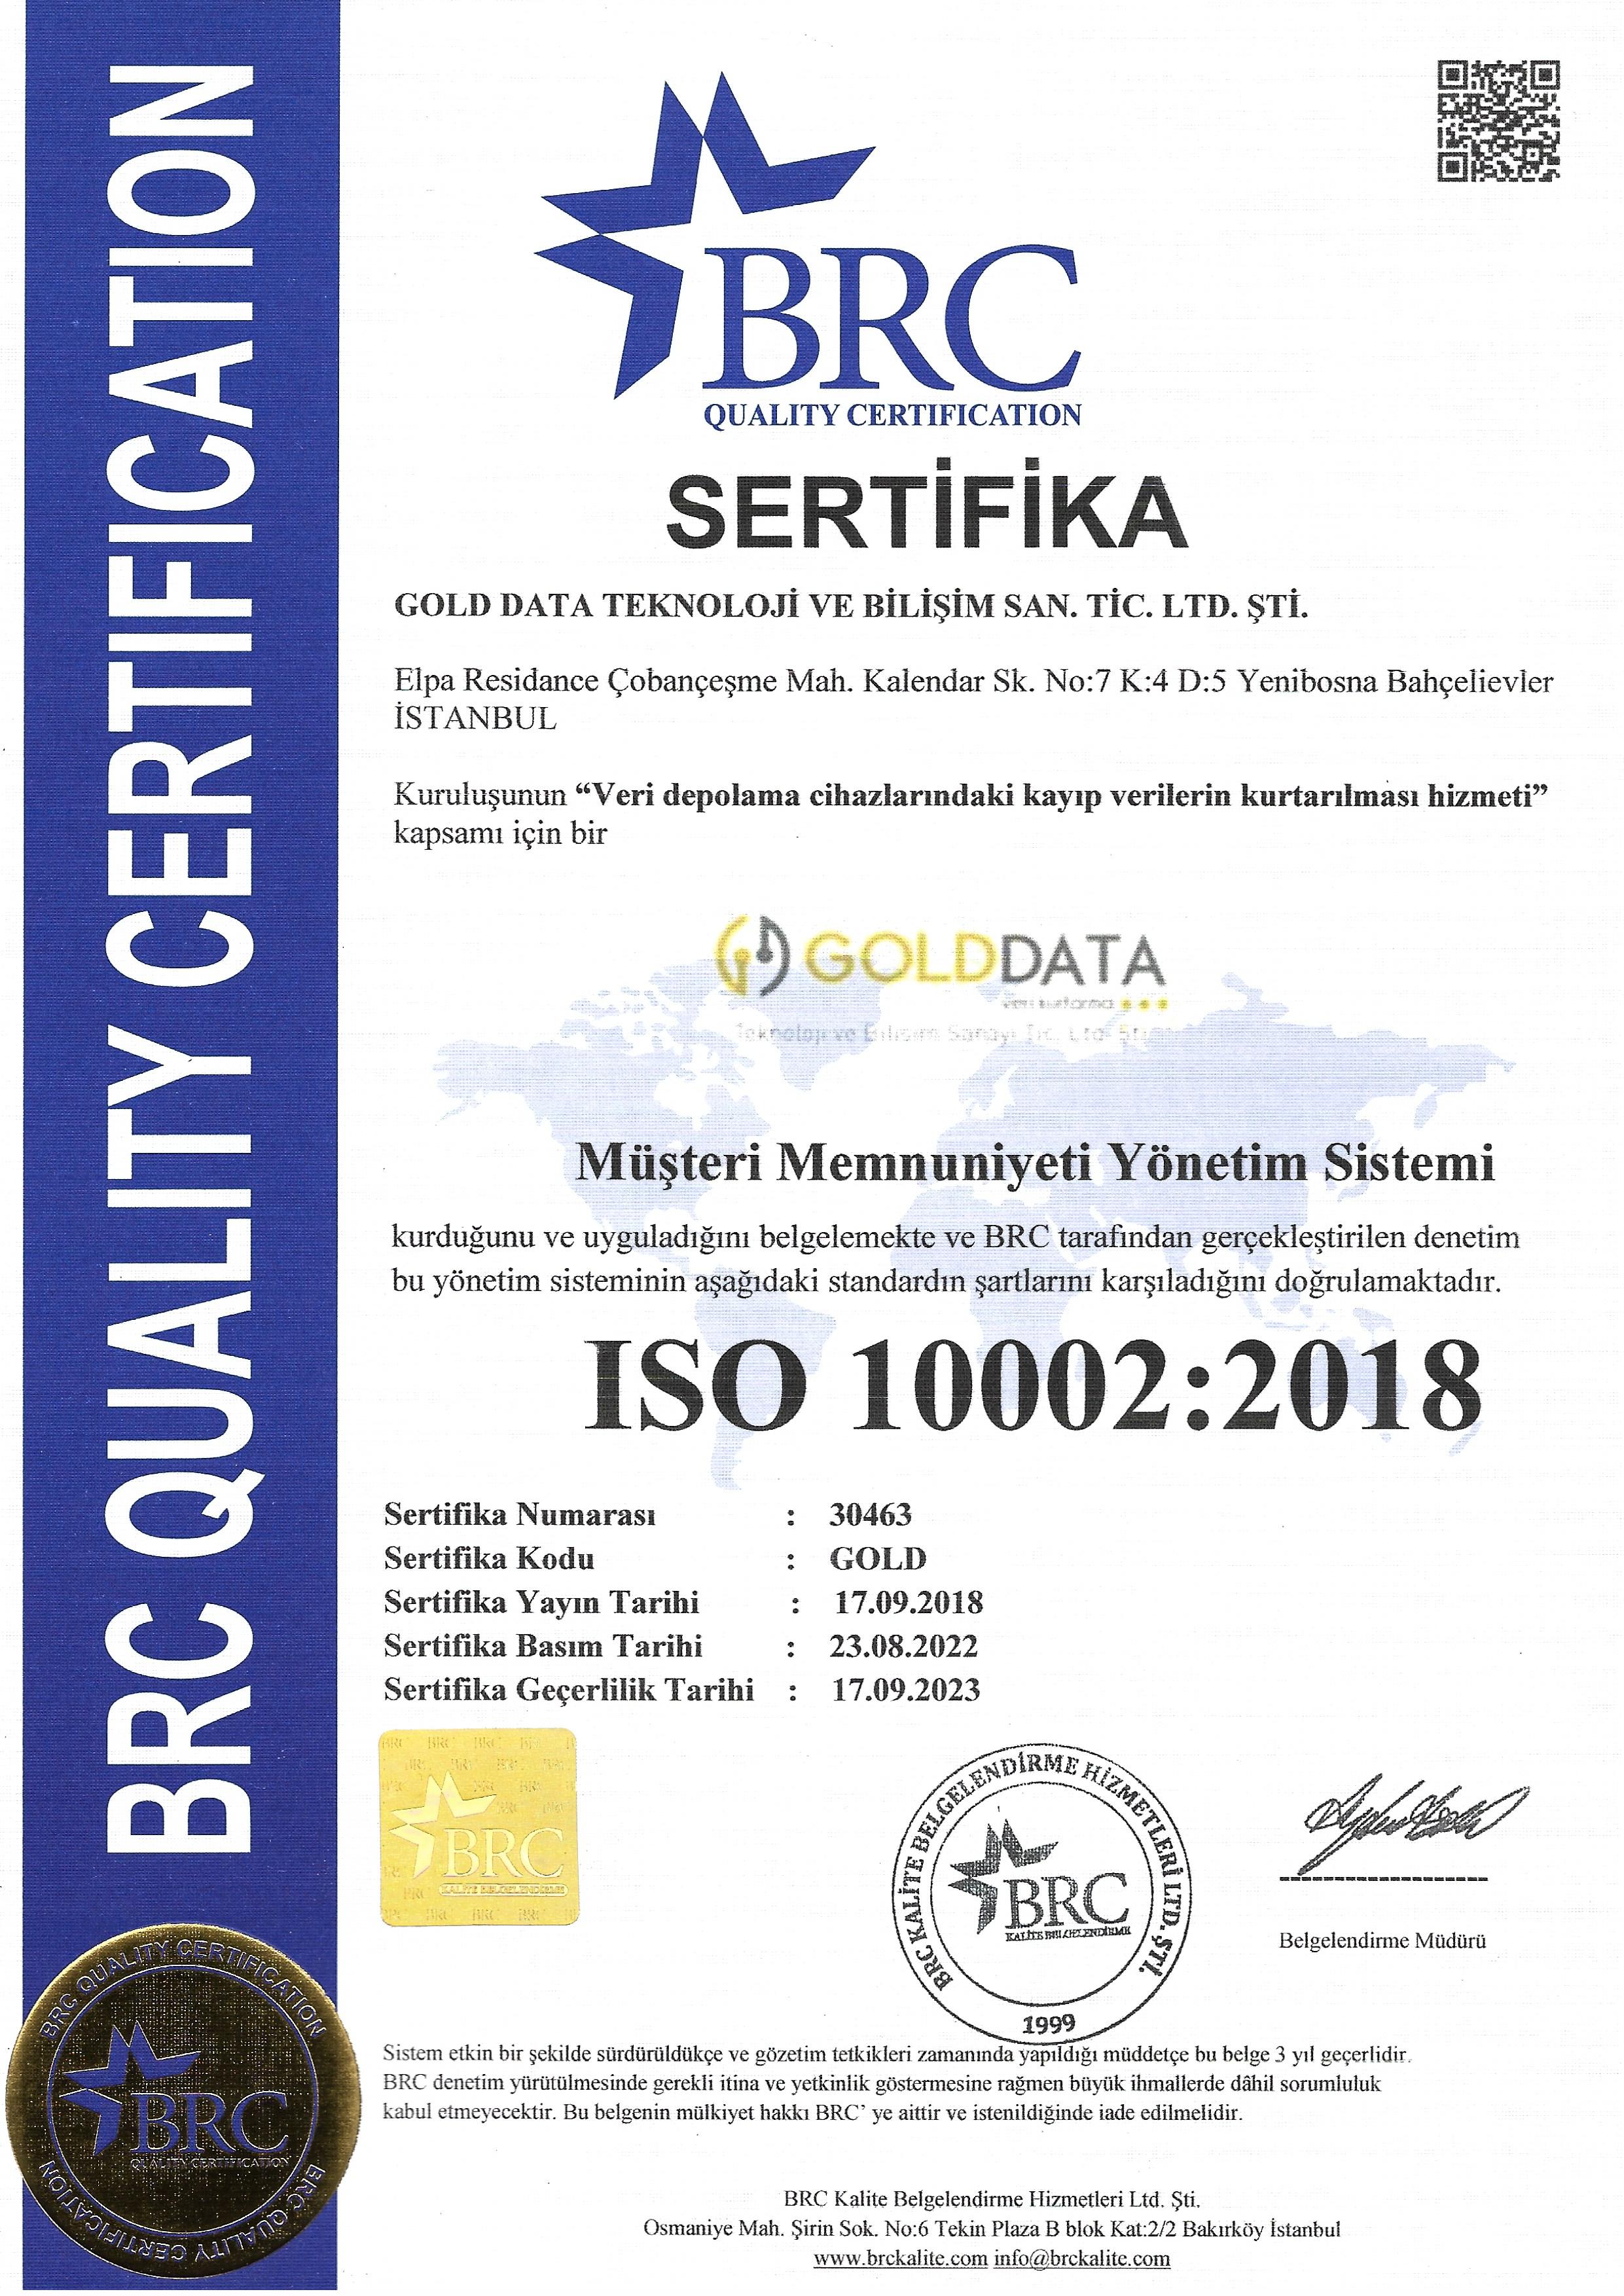 BRC ISO 10002:2018